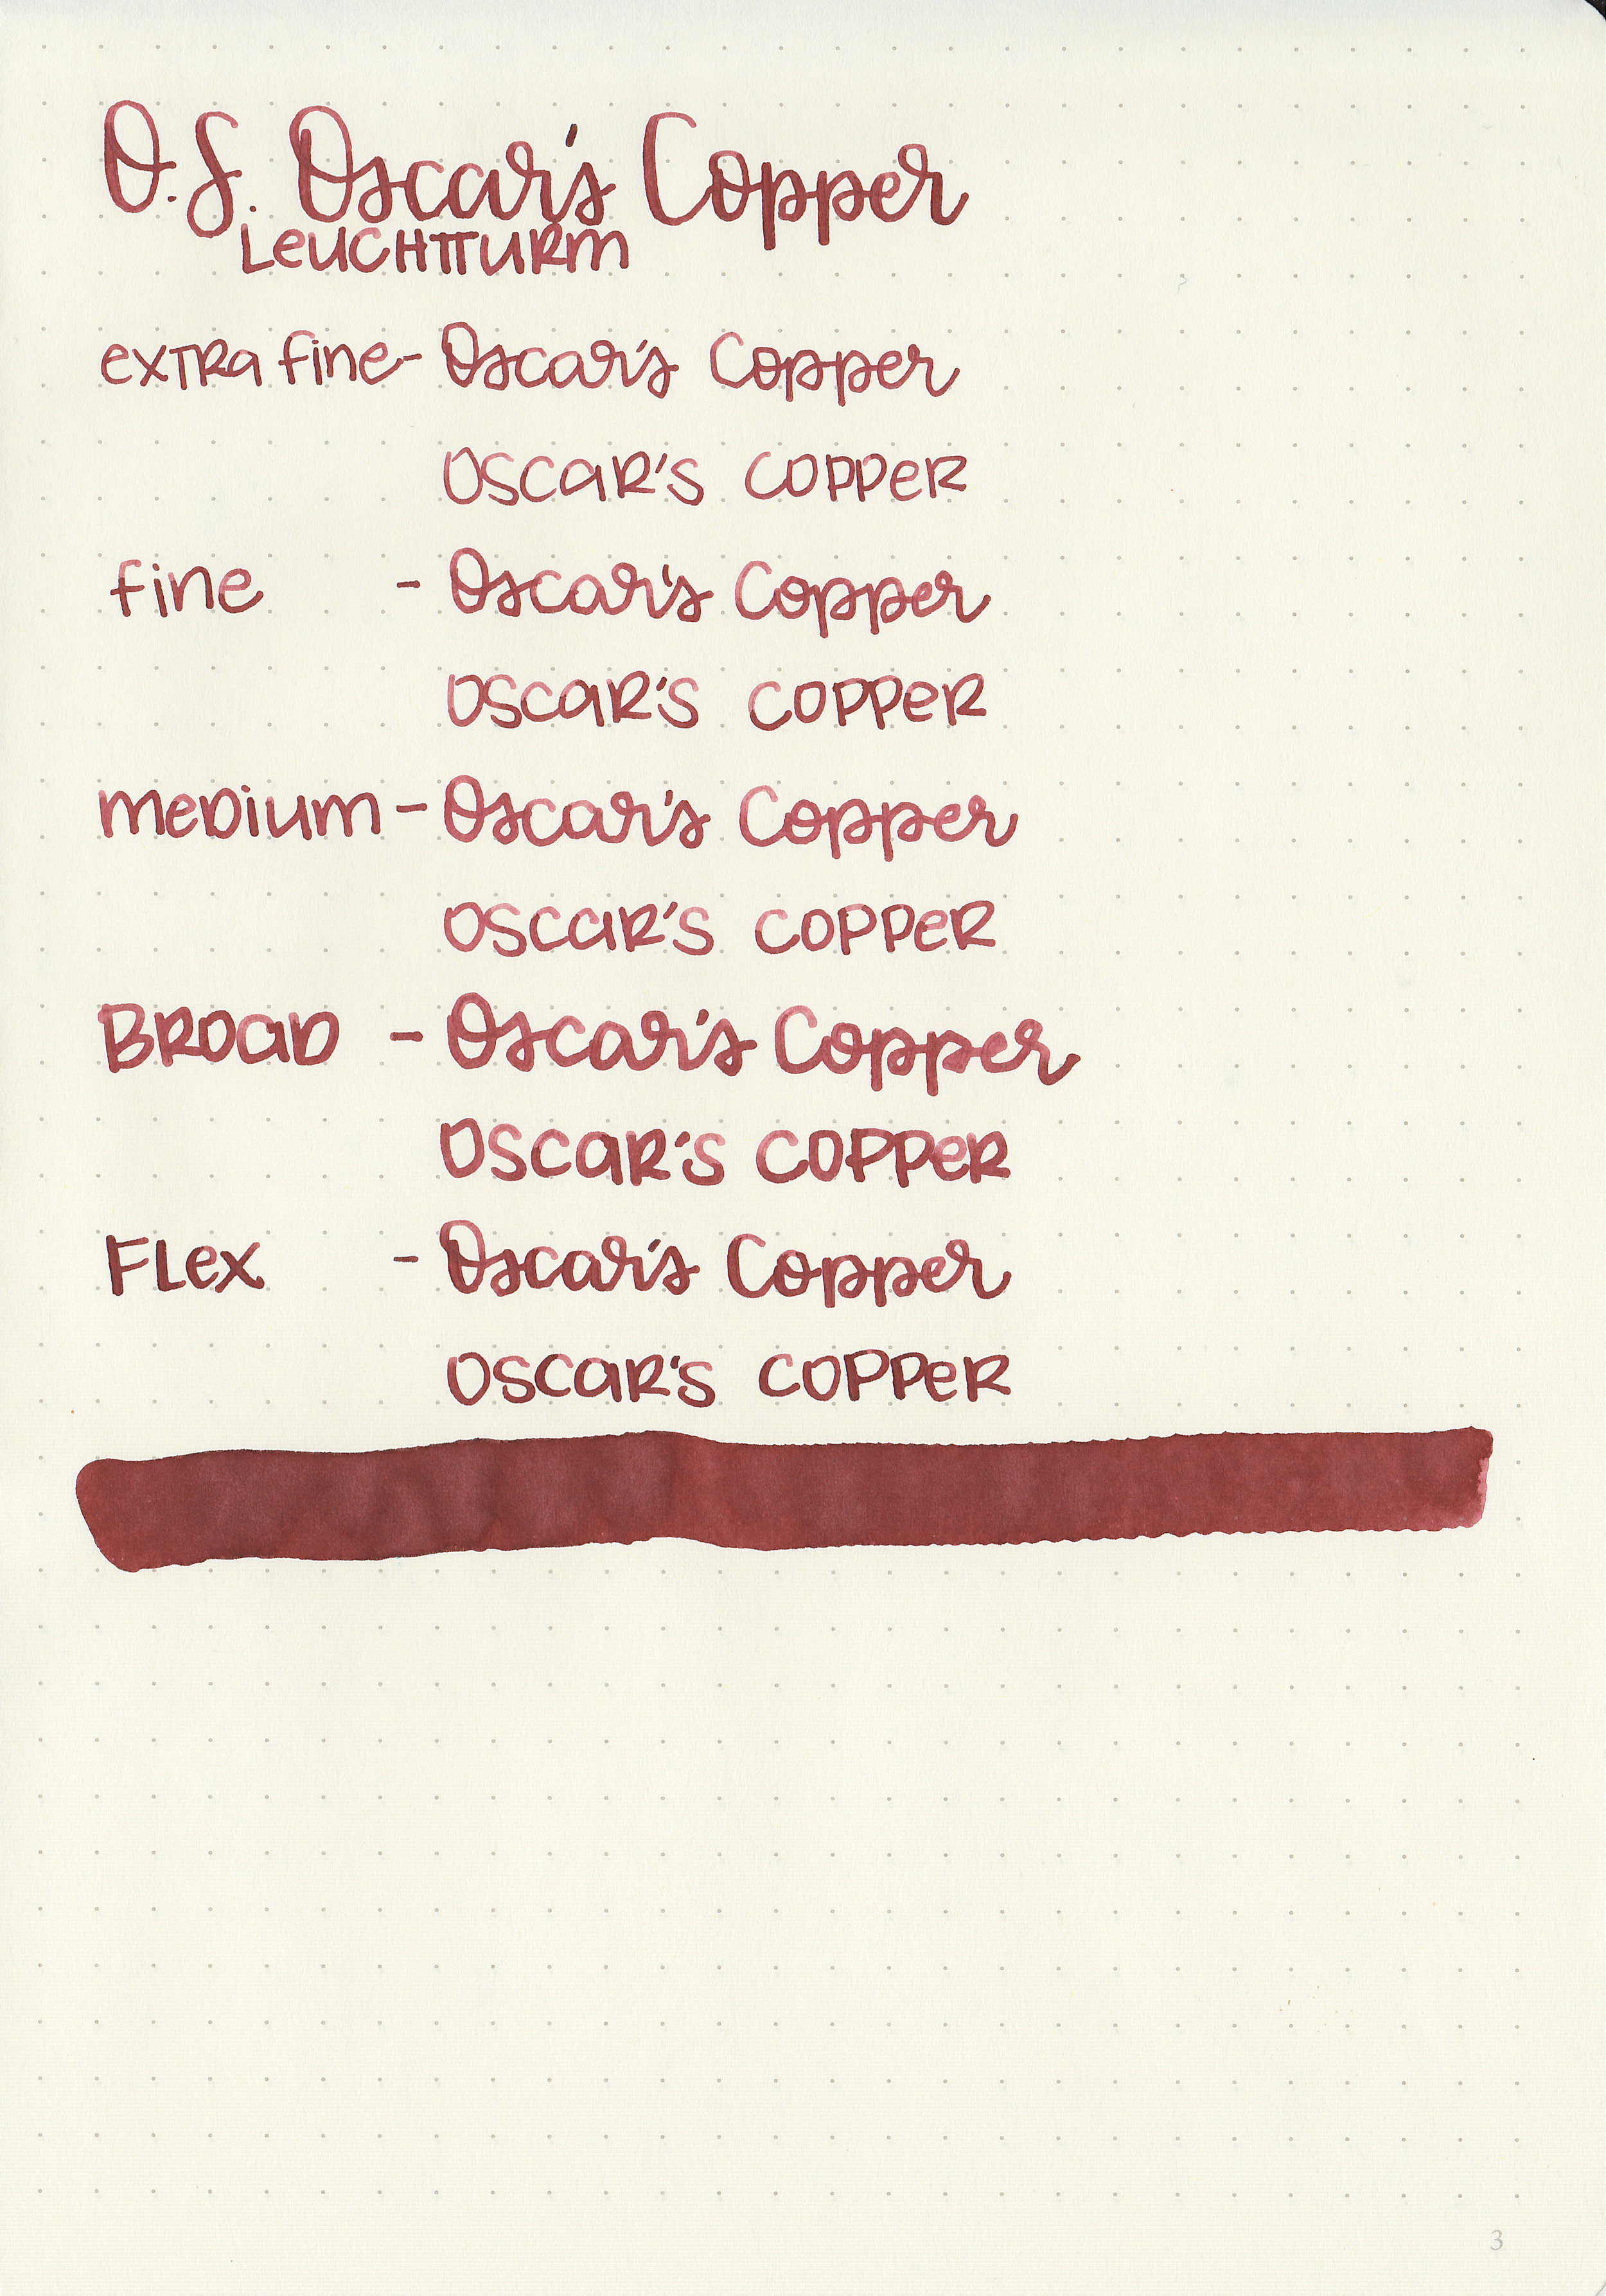 os-oscars-copper-9.jpg